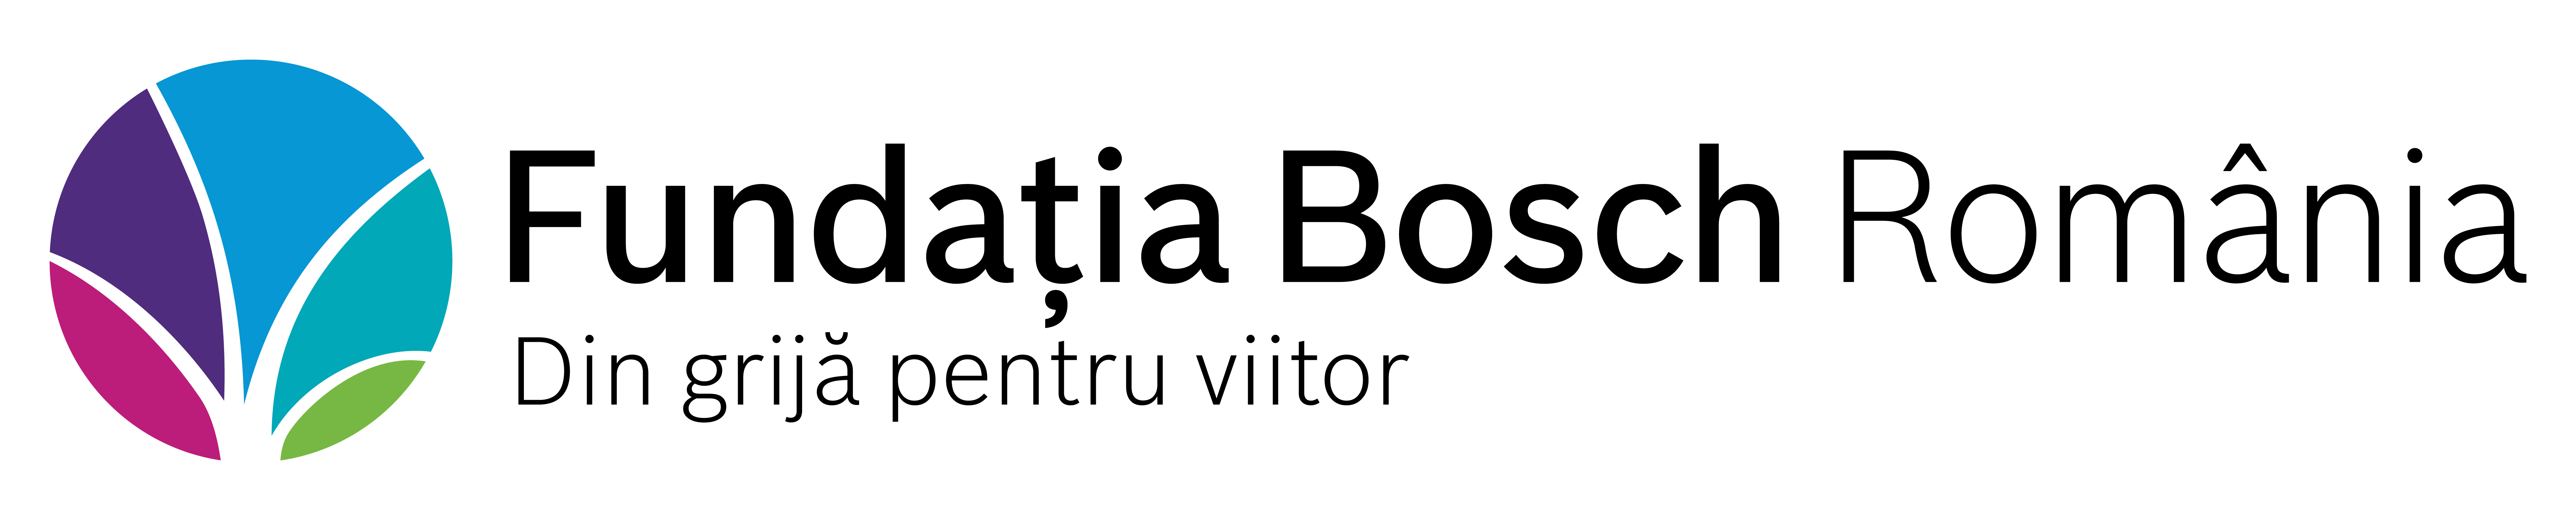 Fundația Bosch România logo